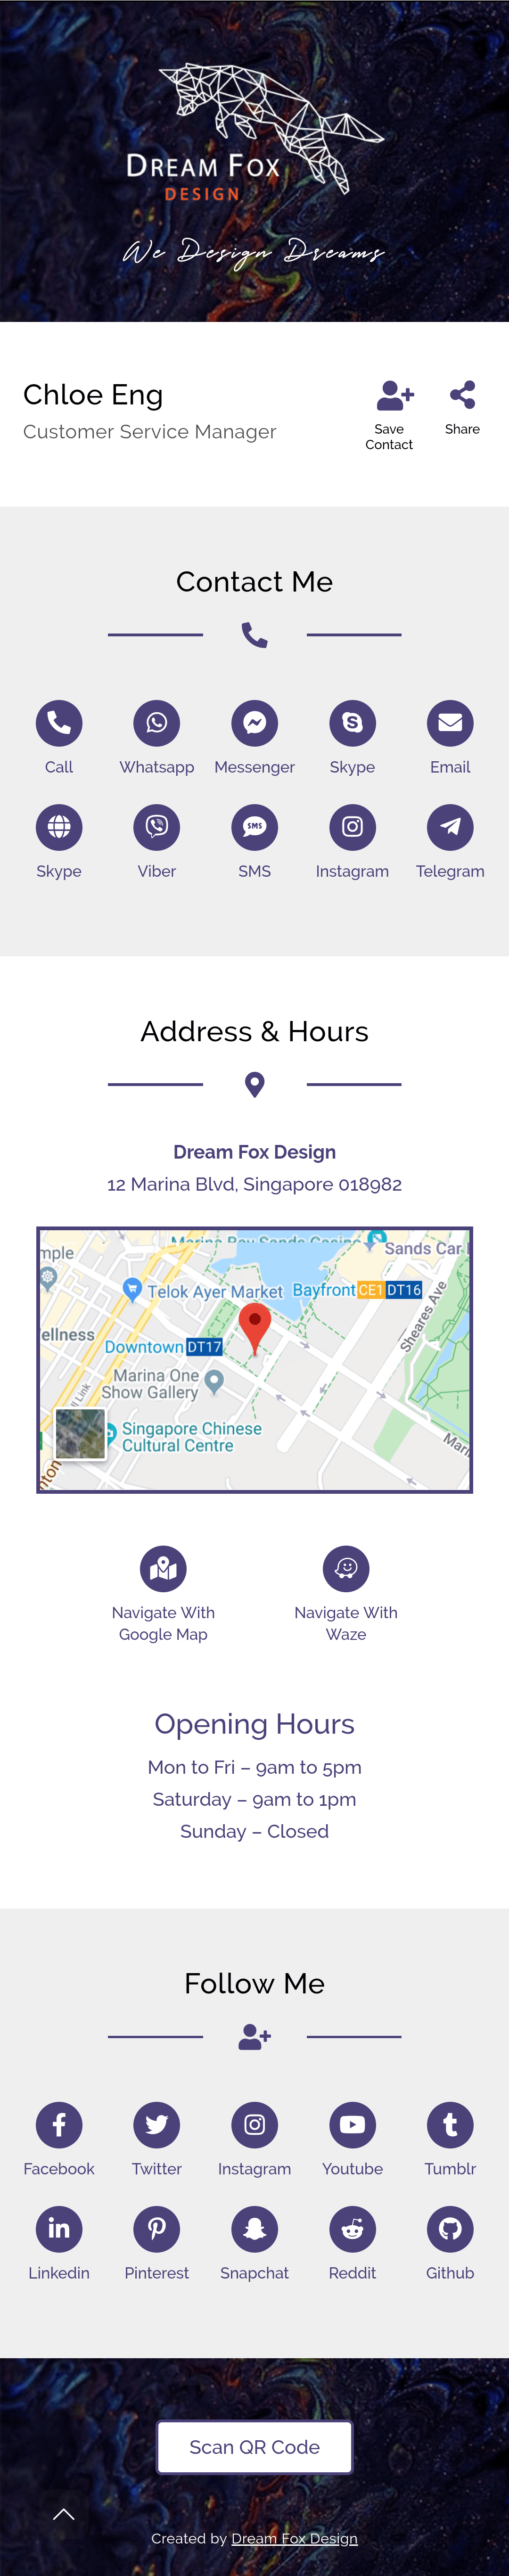 digital name card singapore customer service sample 3 - Dream Fox Design